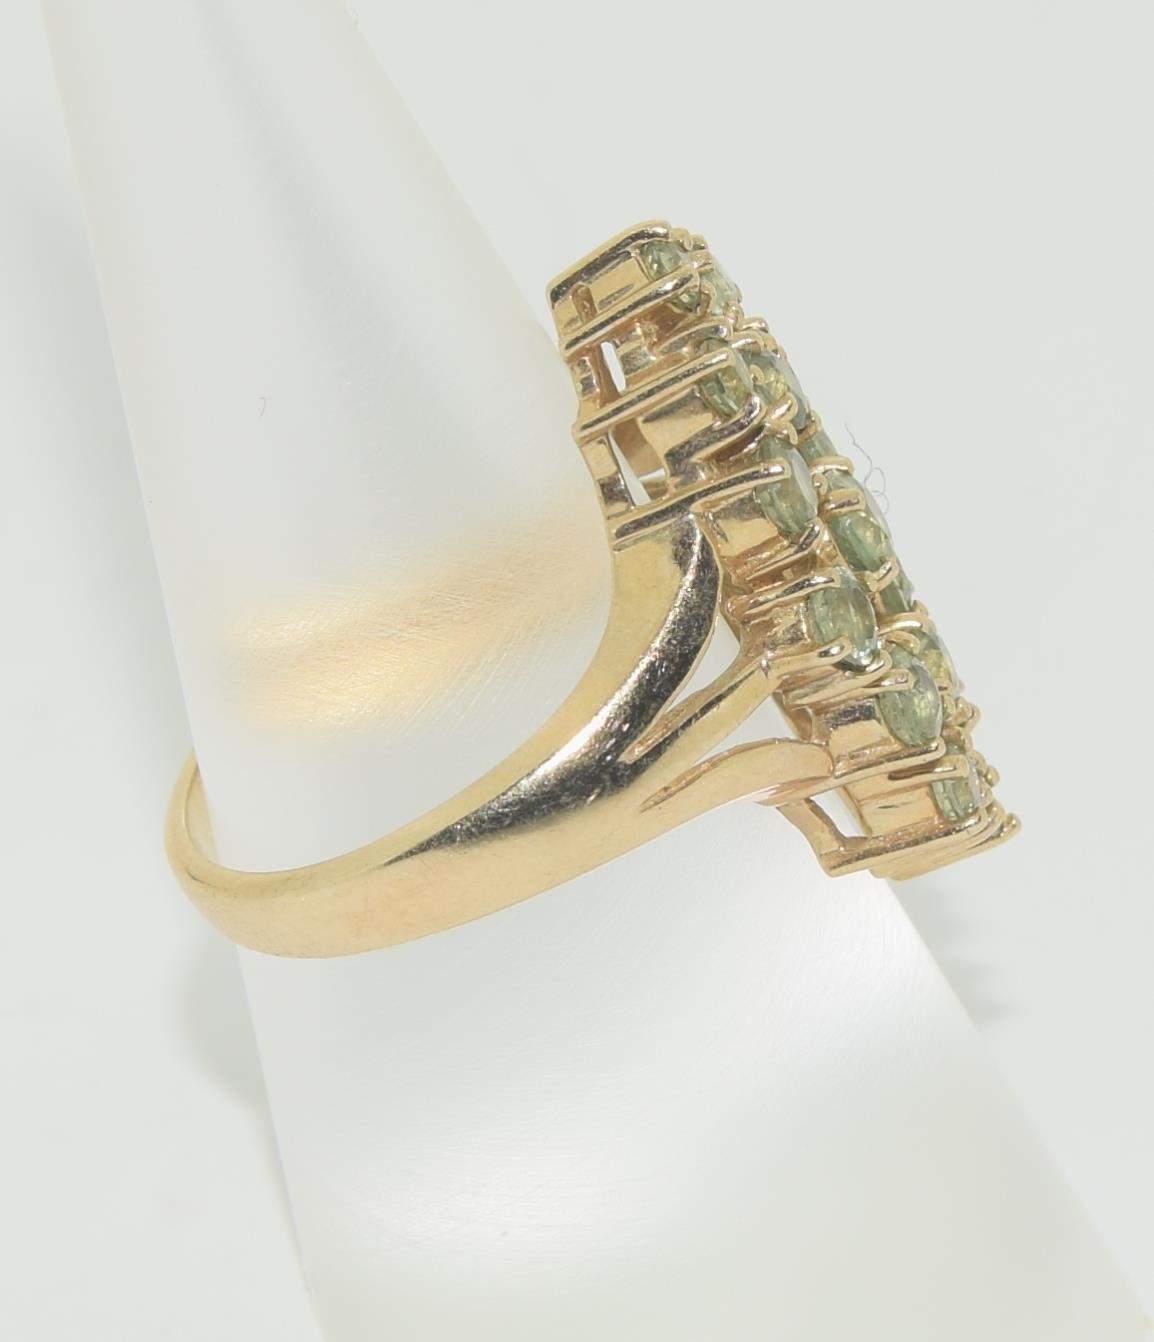 9ct gold ladies Peridot diamond shape ring size P - Image 2 of 5